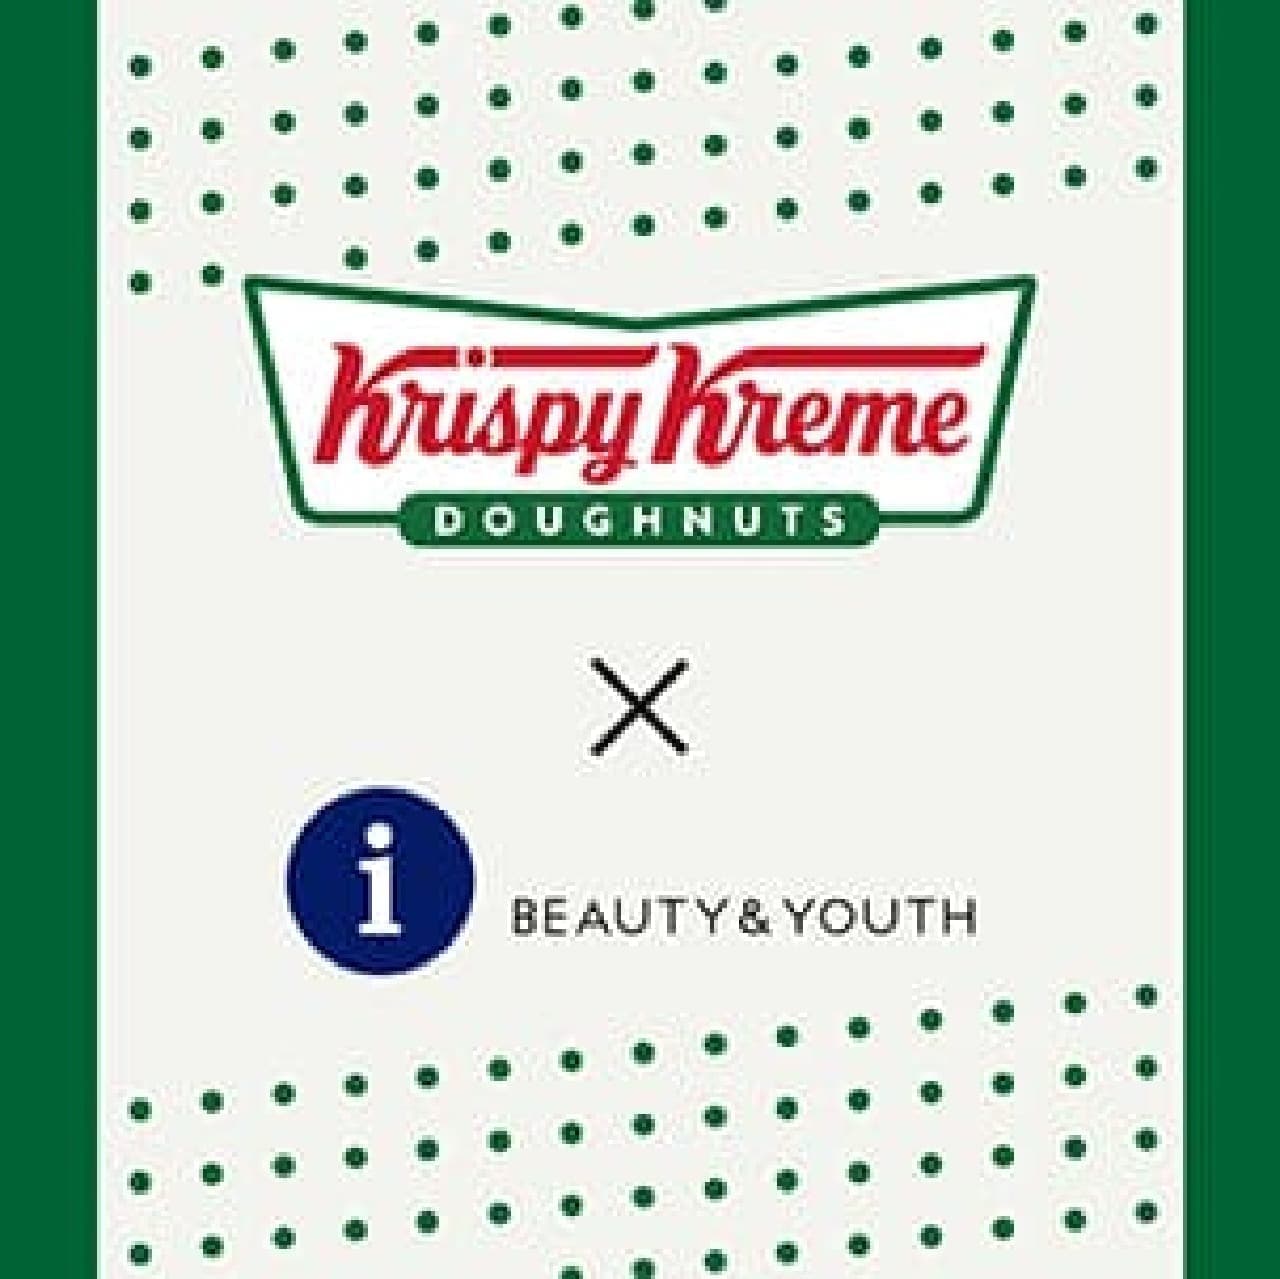 Collaboration between Krispy Kreme Donuts and UNITED ARROWS --KKD 15th Anniversary T-shirt, Cap, Tote Bag